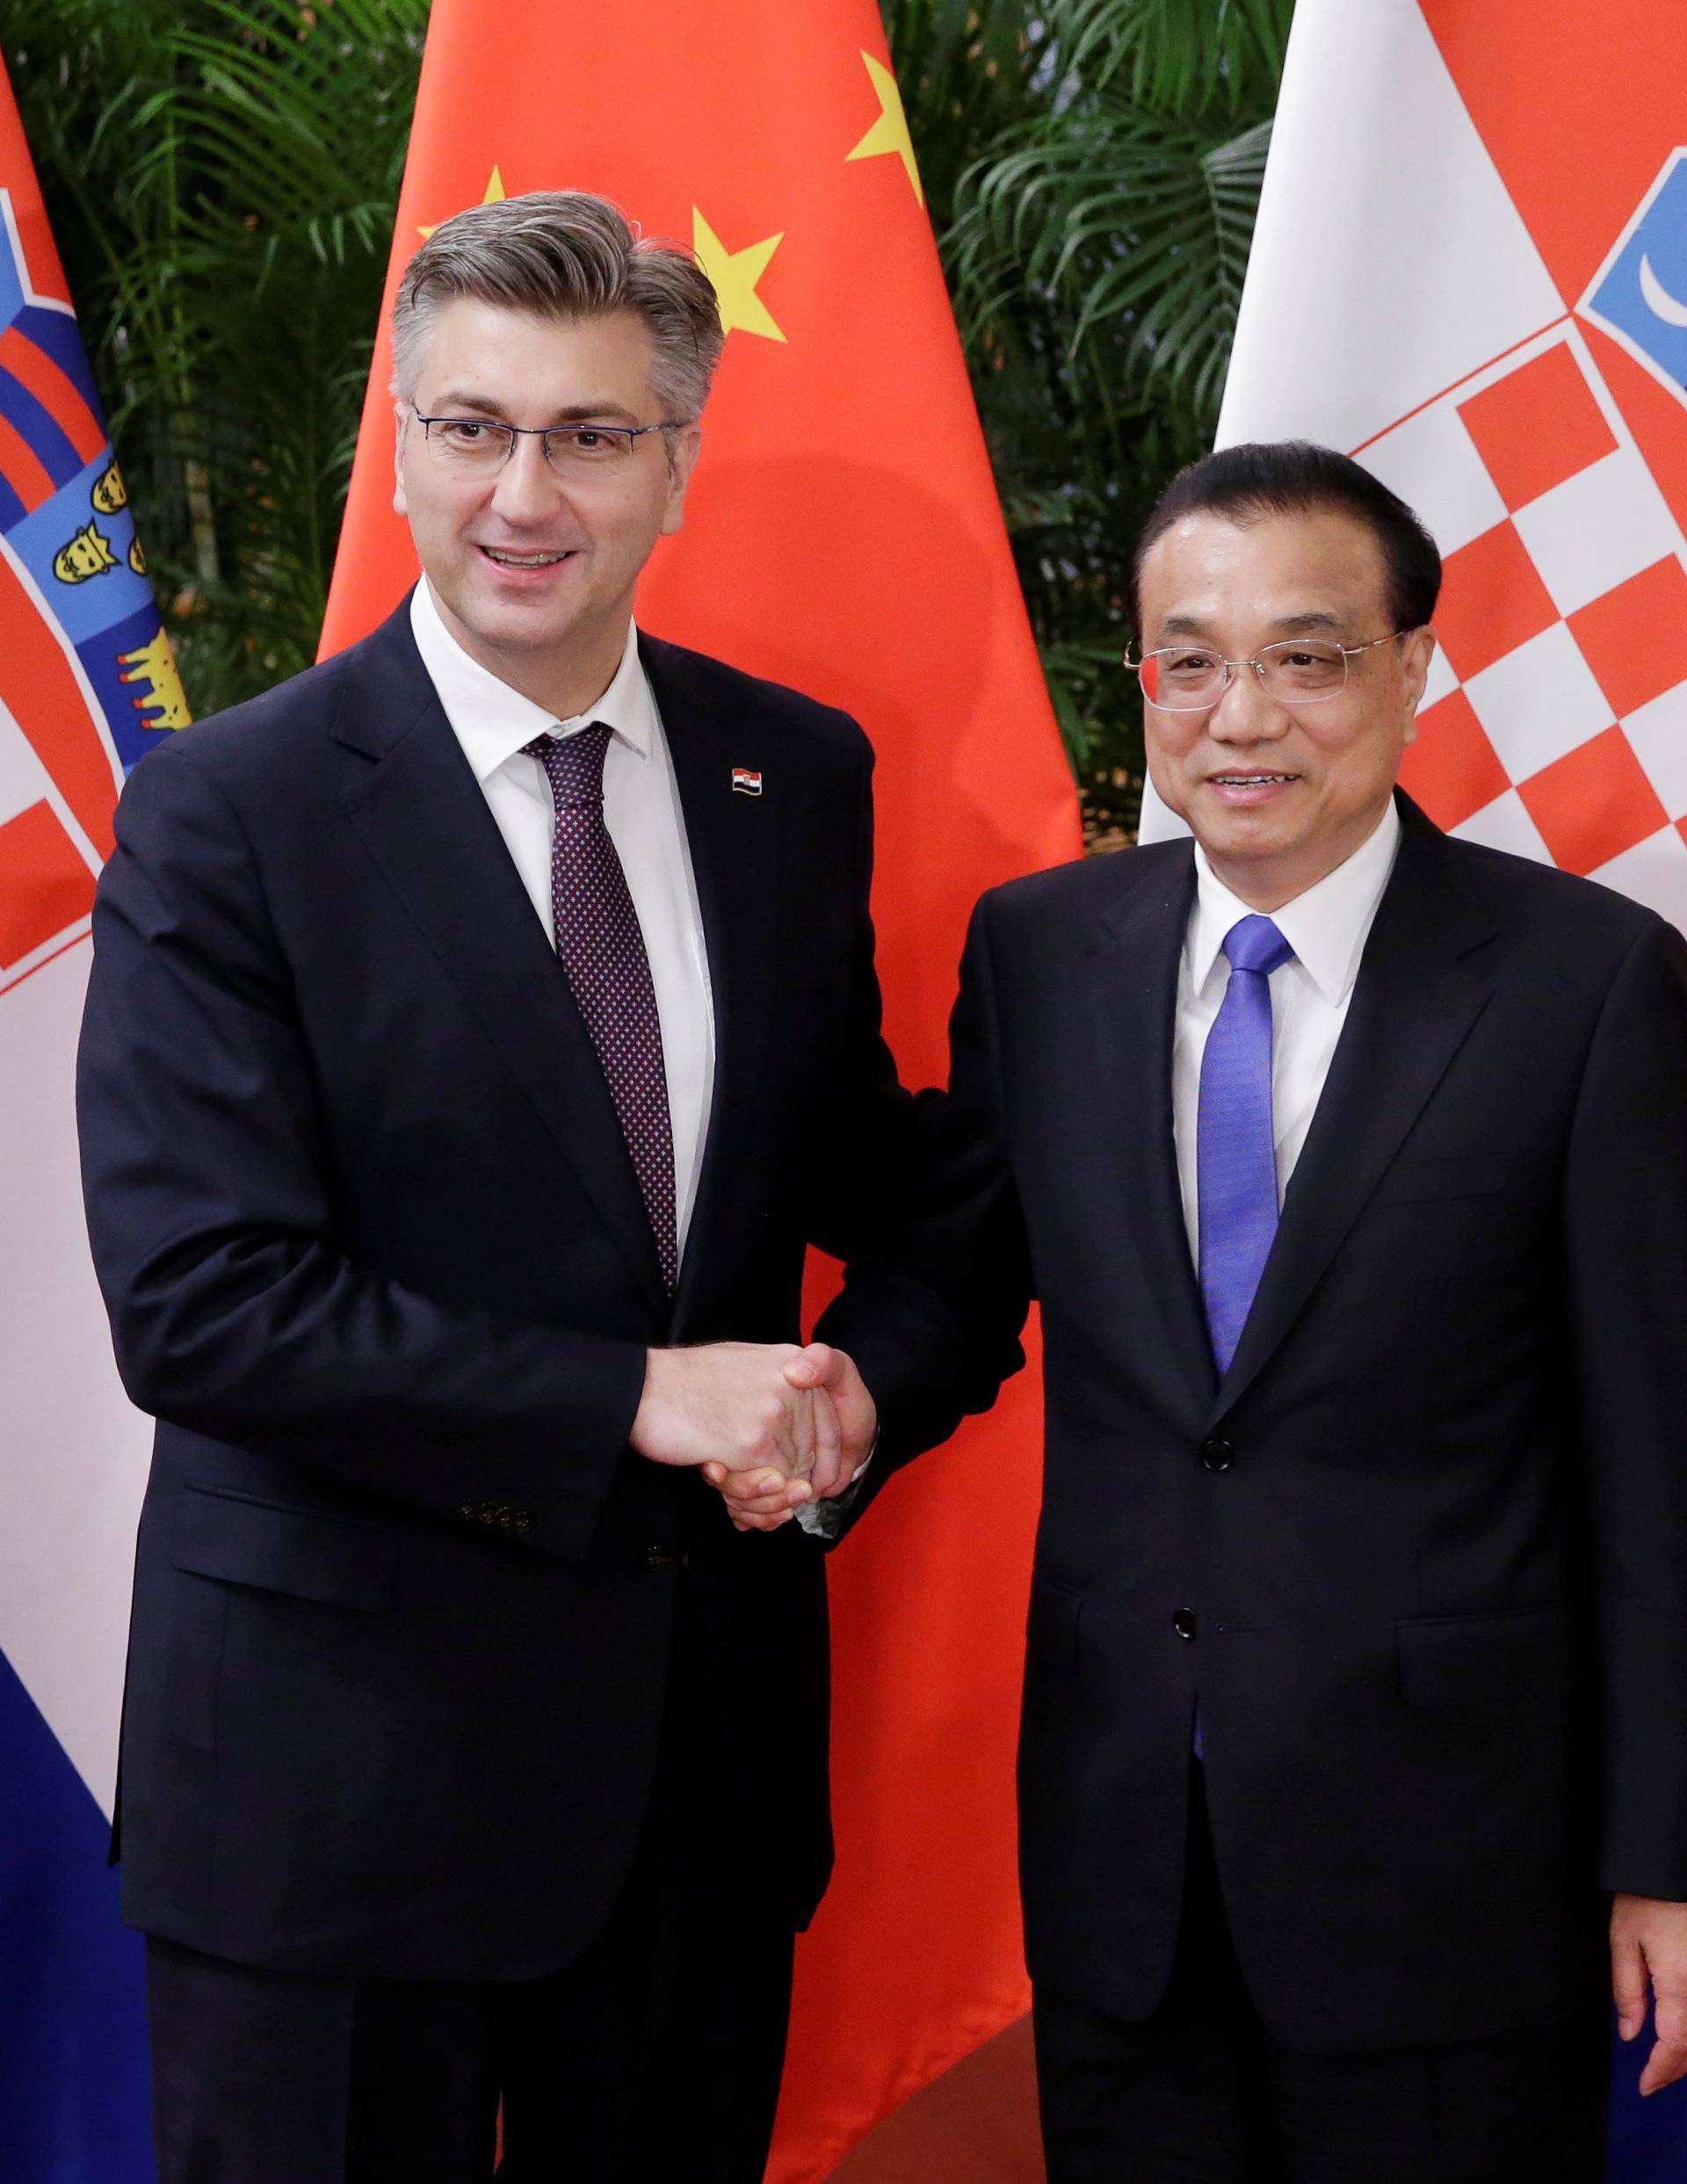 China's Premier Li Keqiang meets Croatia's Prime Minister Andrej Plenkovic in Beijing